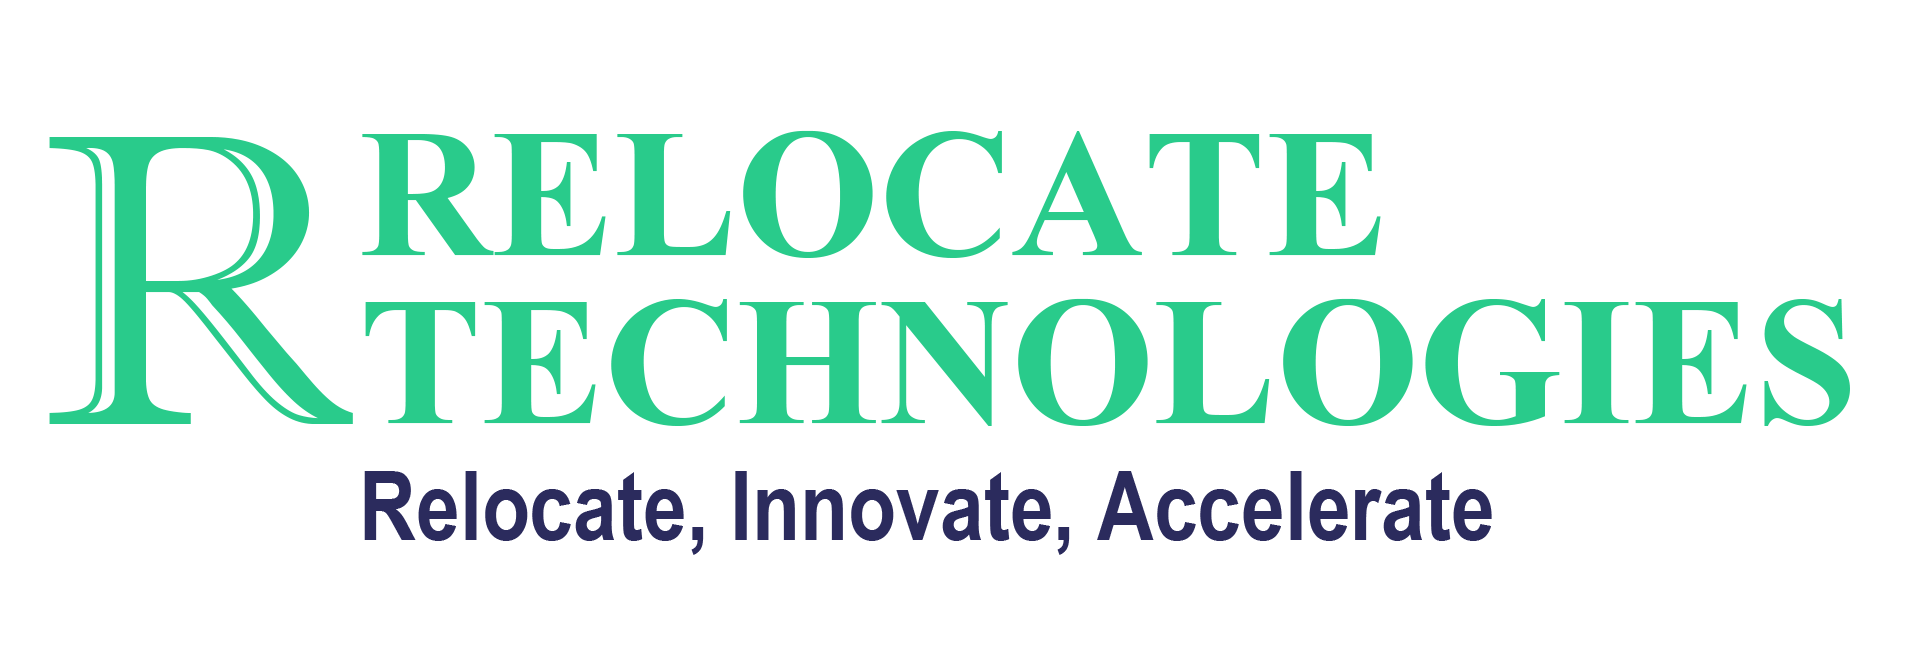 relocate technologies logo